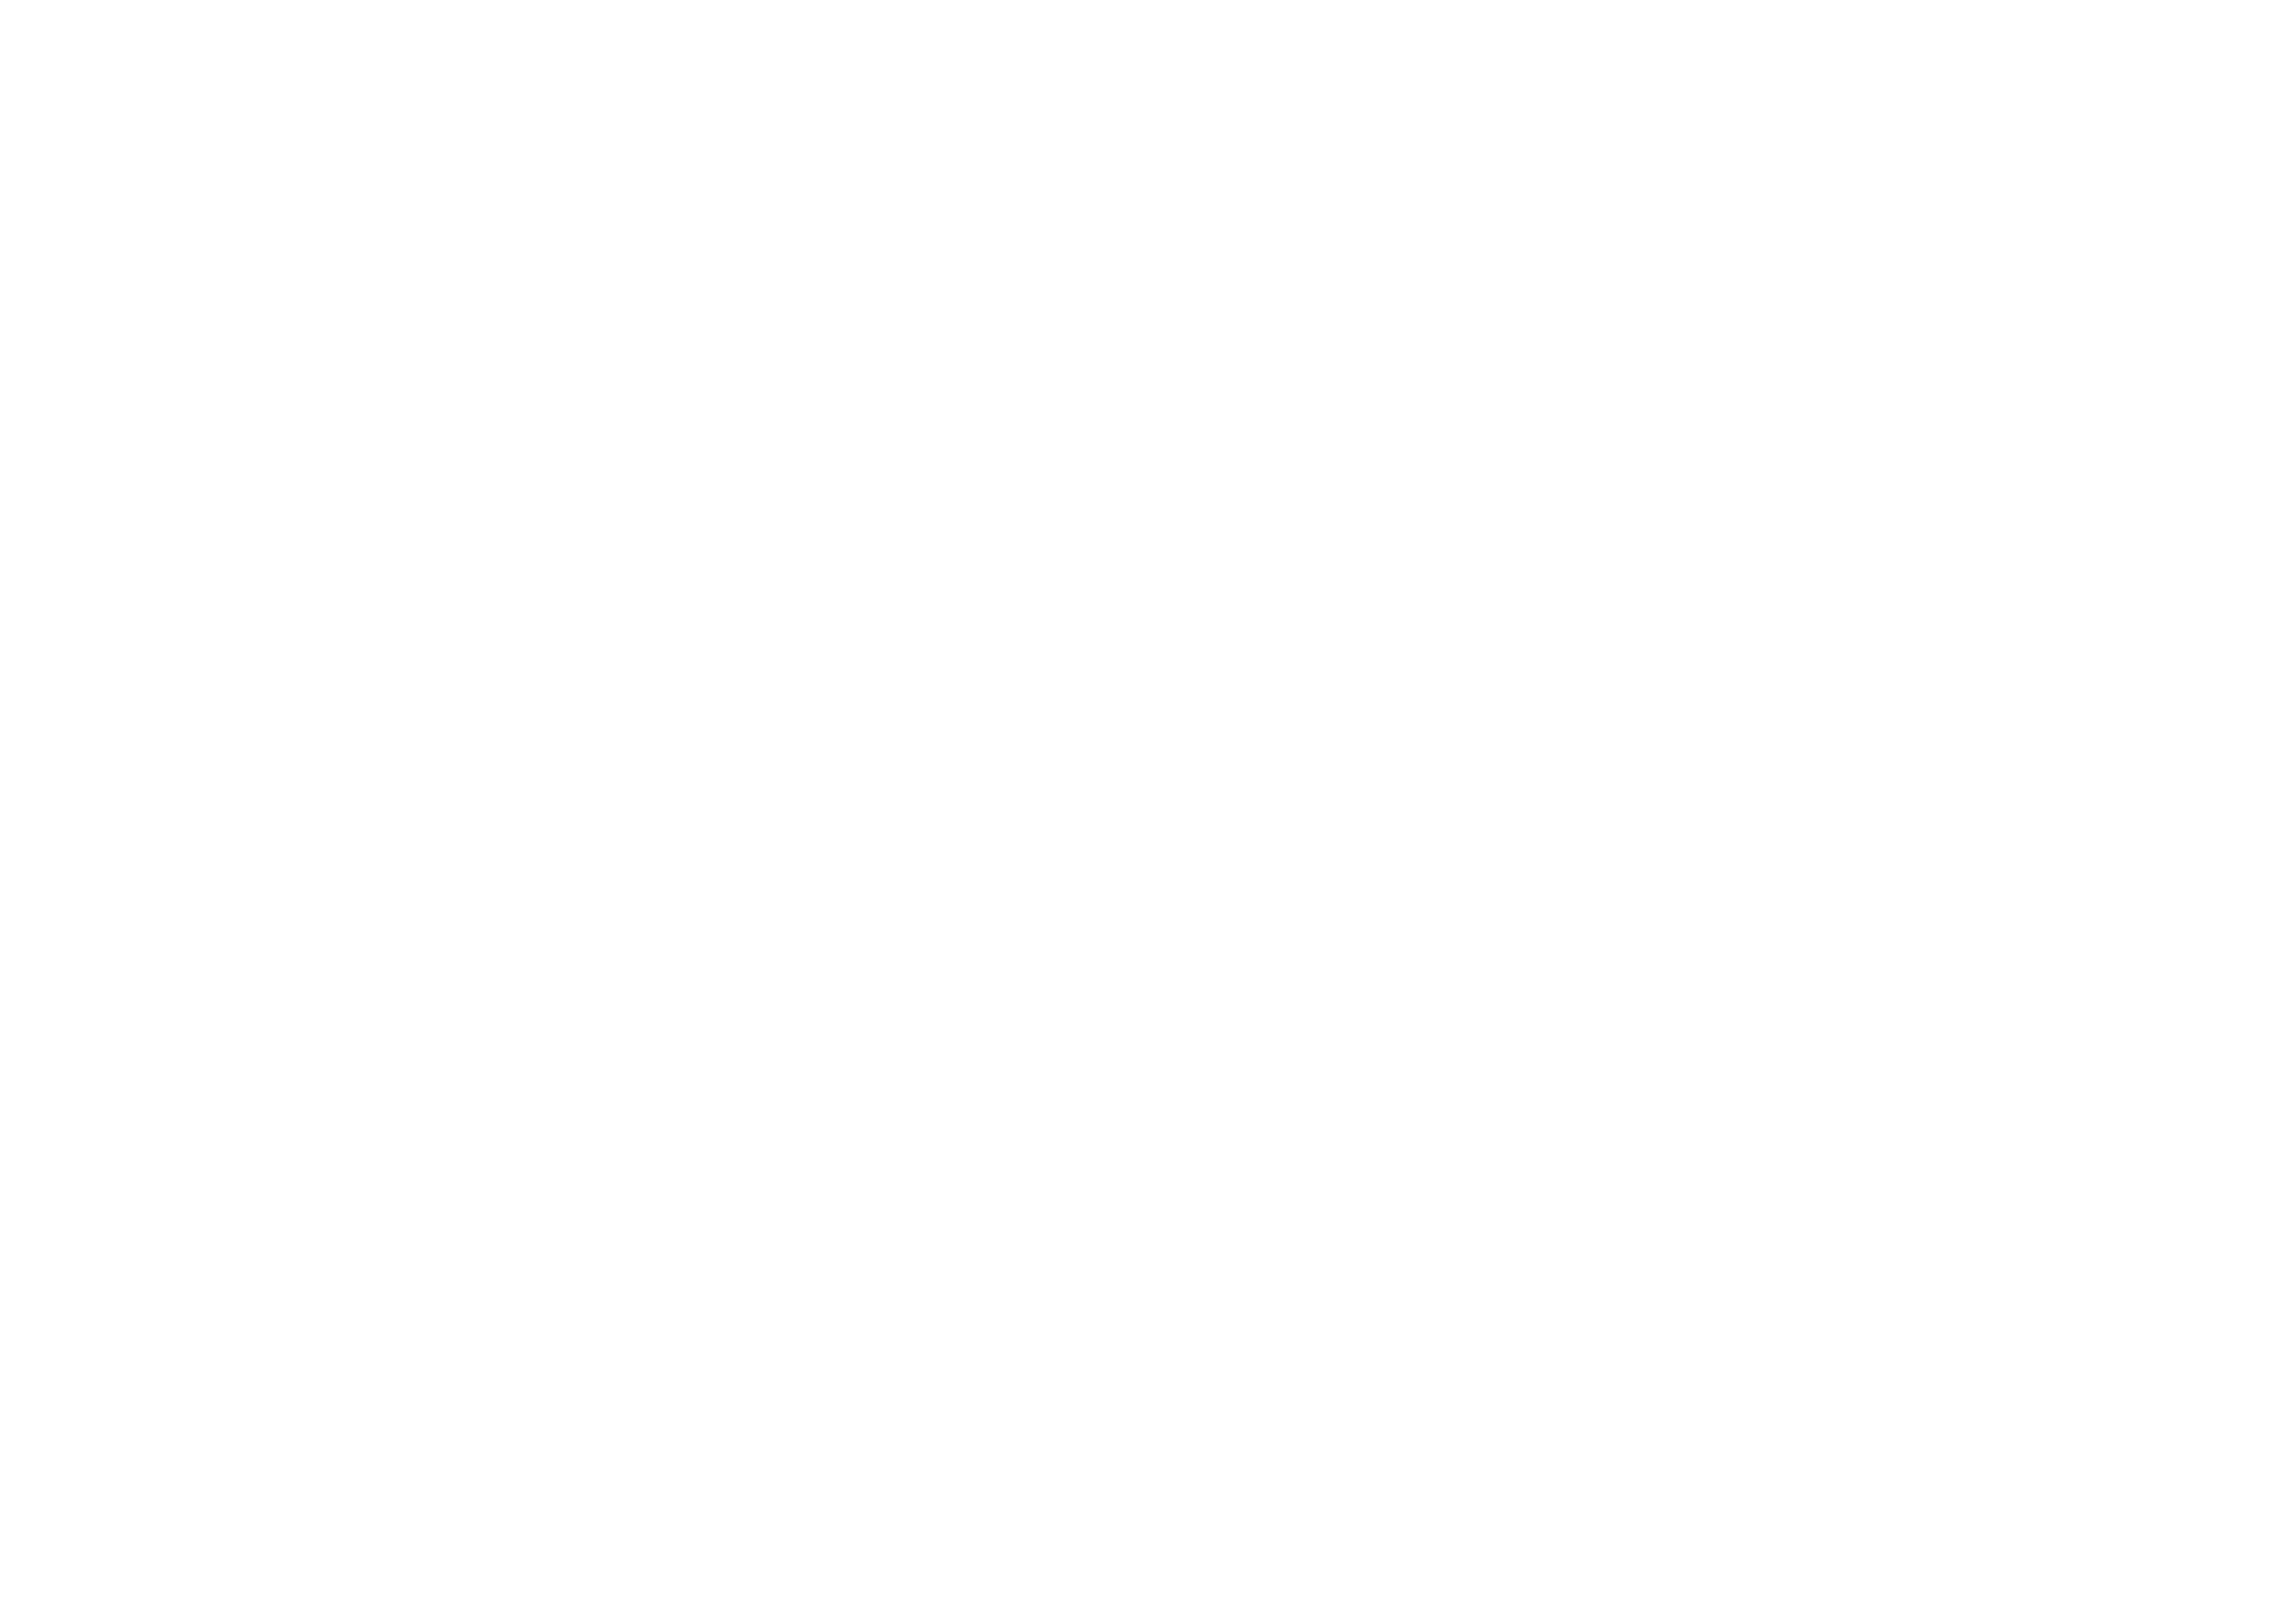 Arrogance Blue